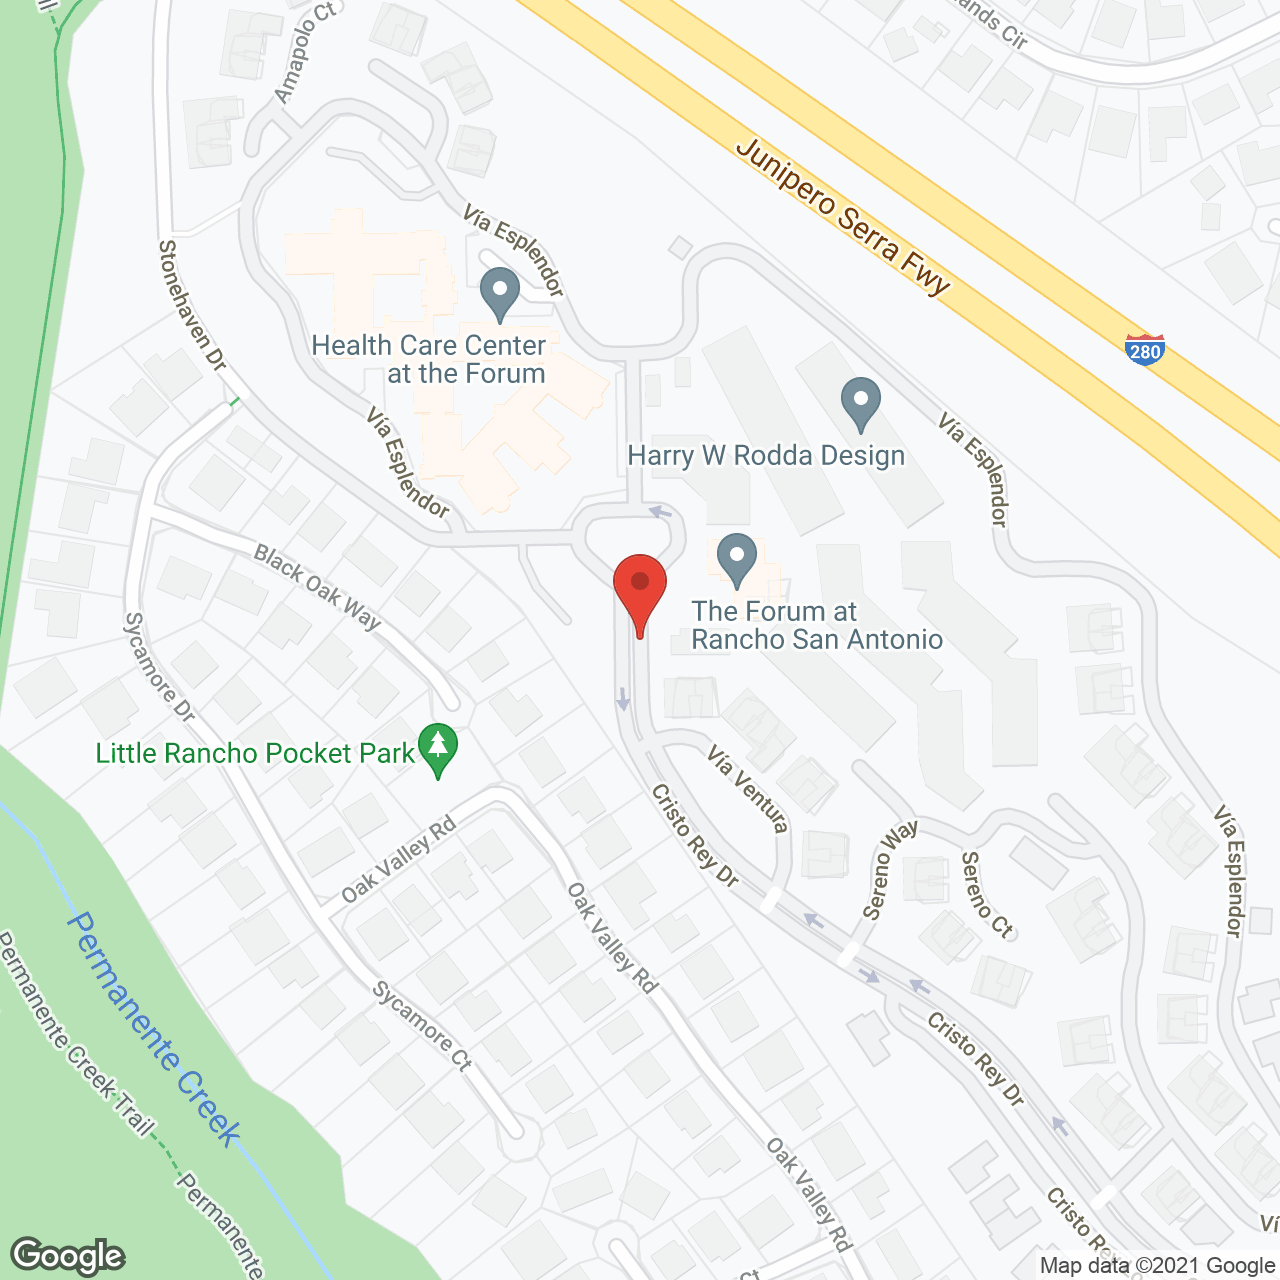 The Forum At Rancho San Antonio in google map